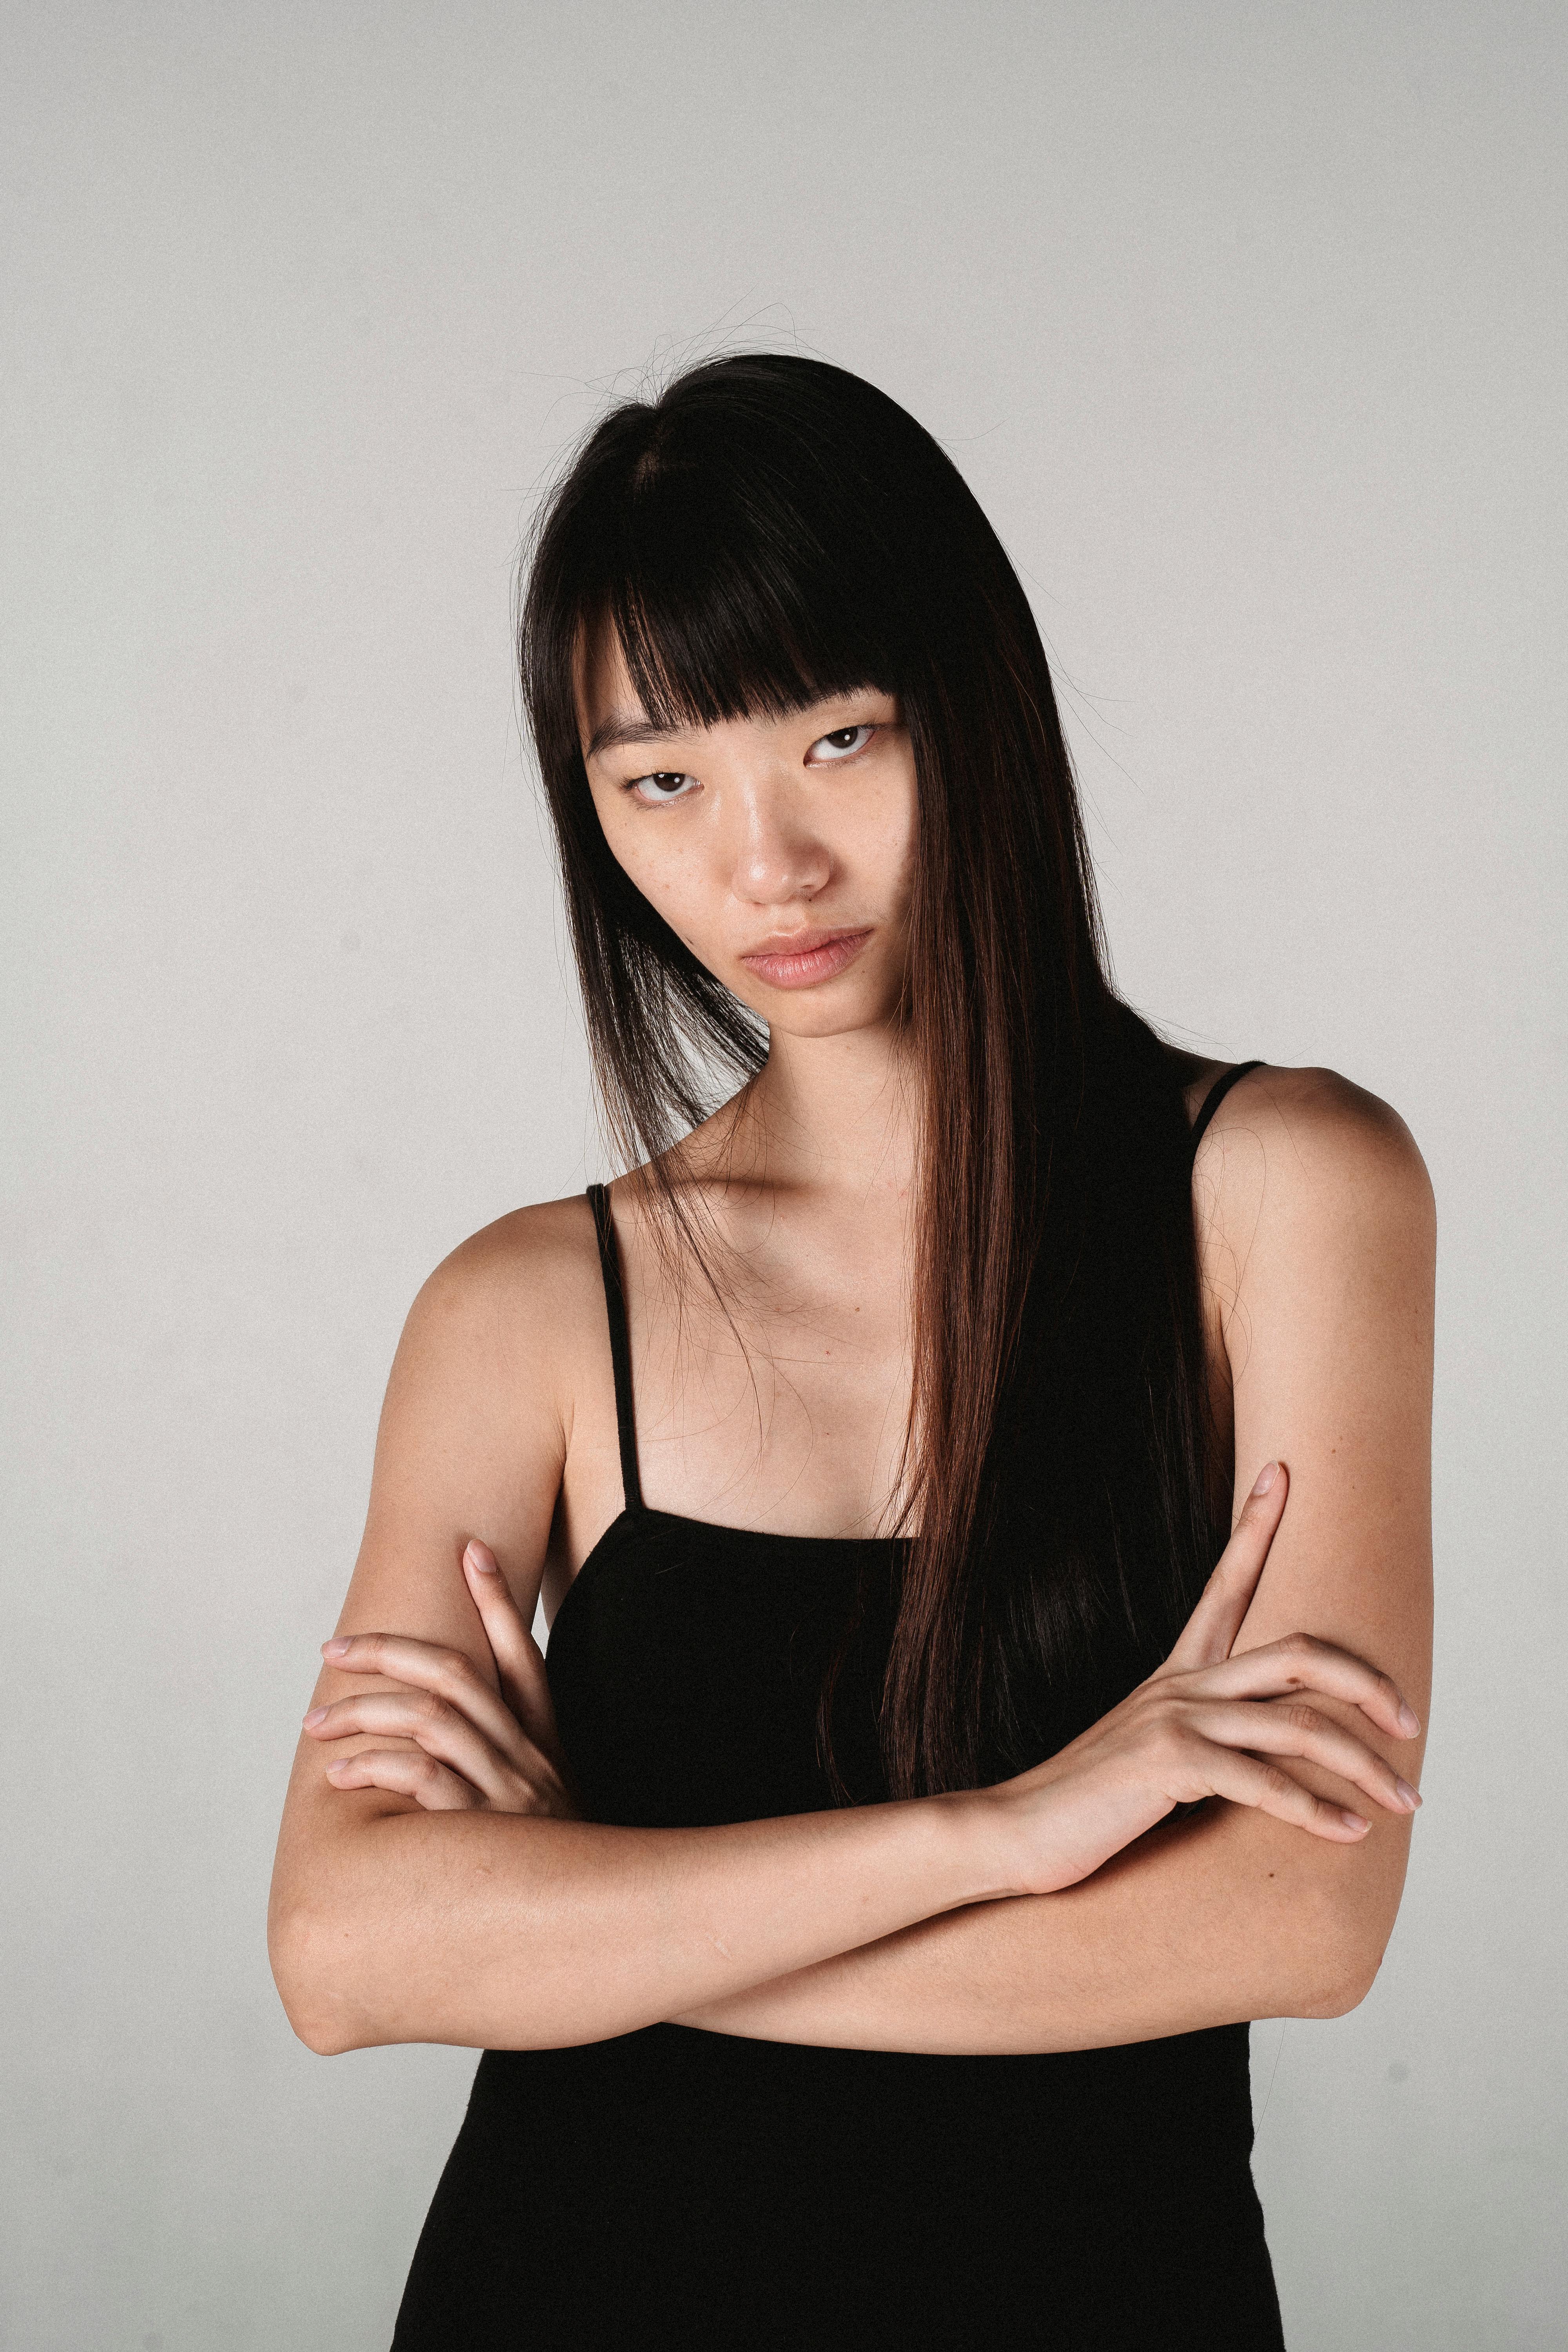 Beautiful Young Asian Woman Bodysuit Black Stock Photo 1022008762